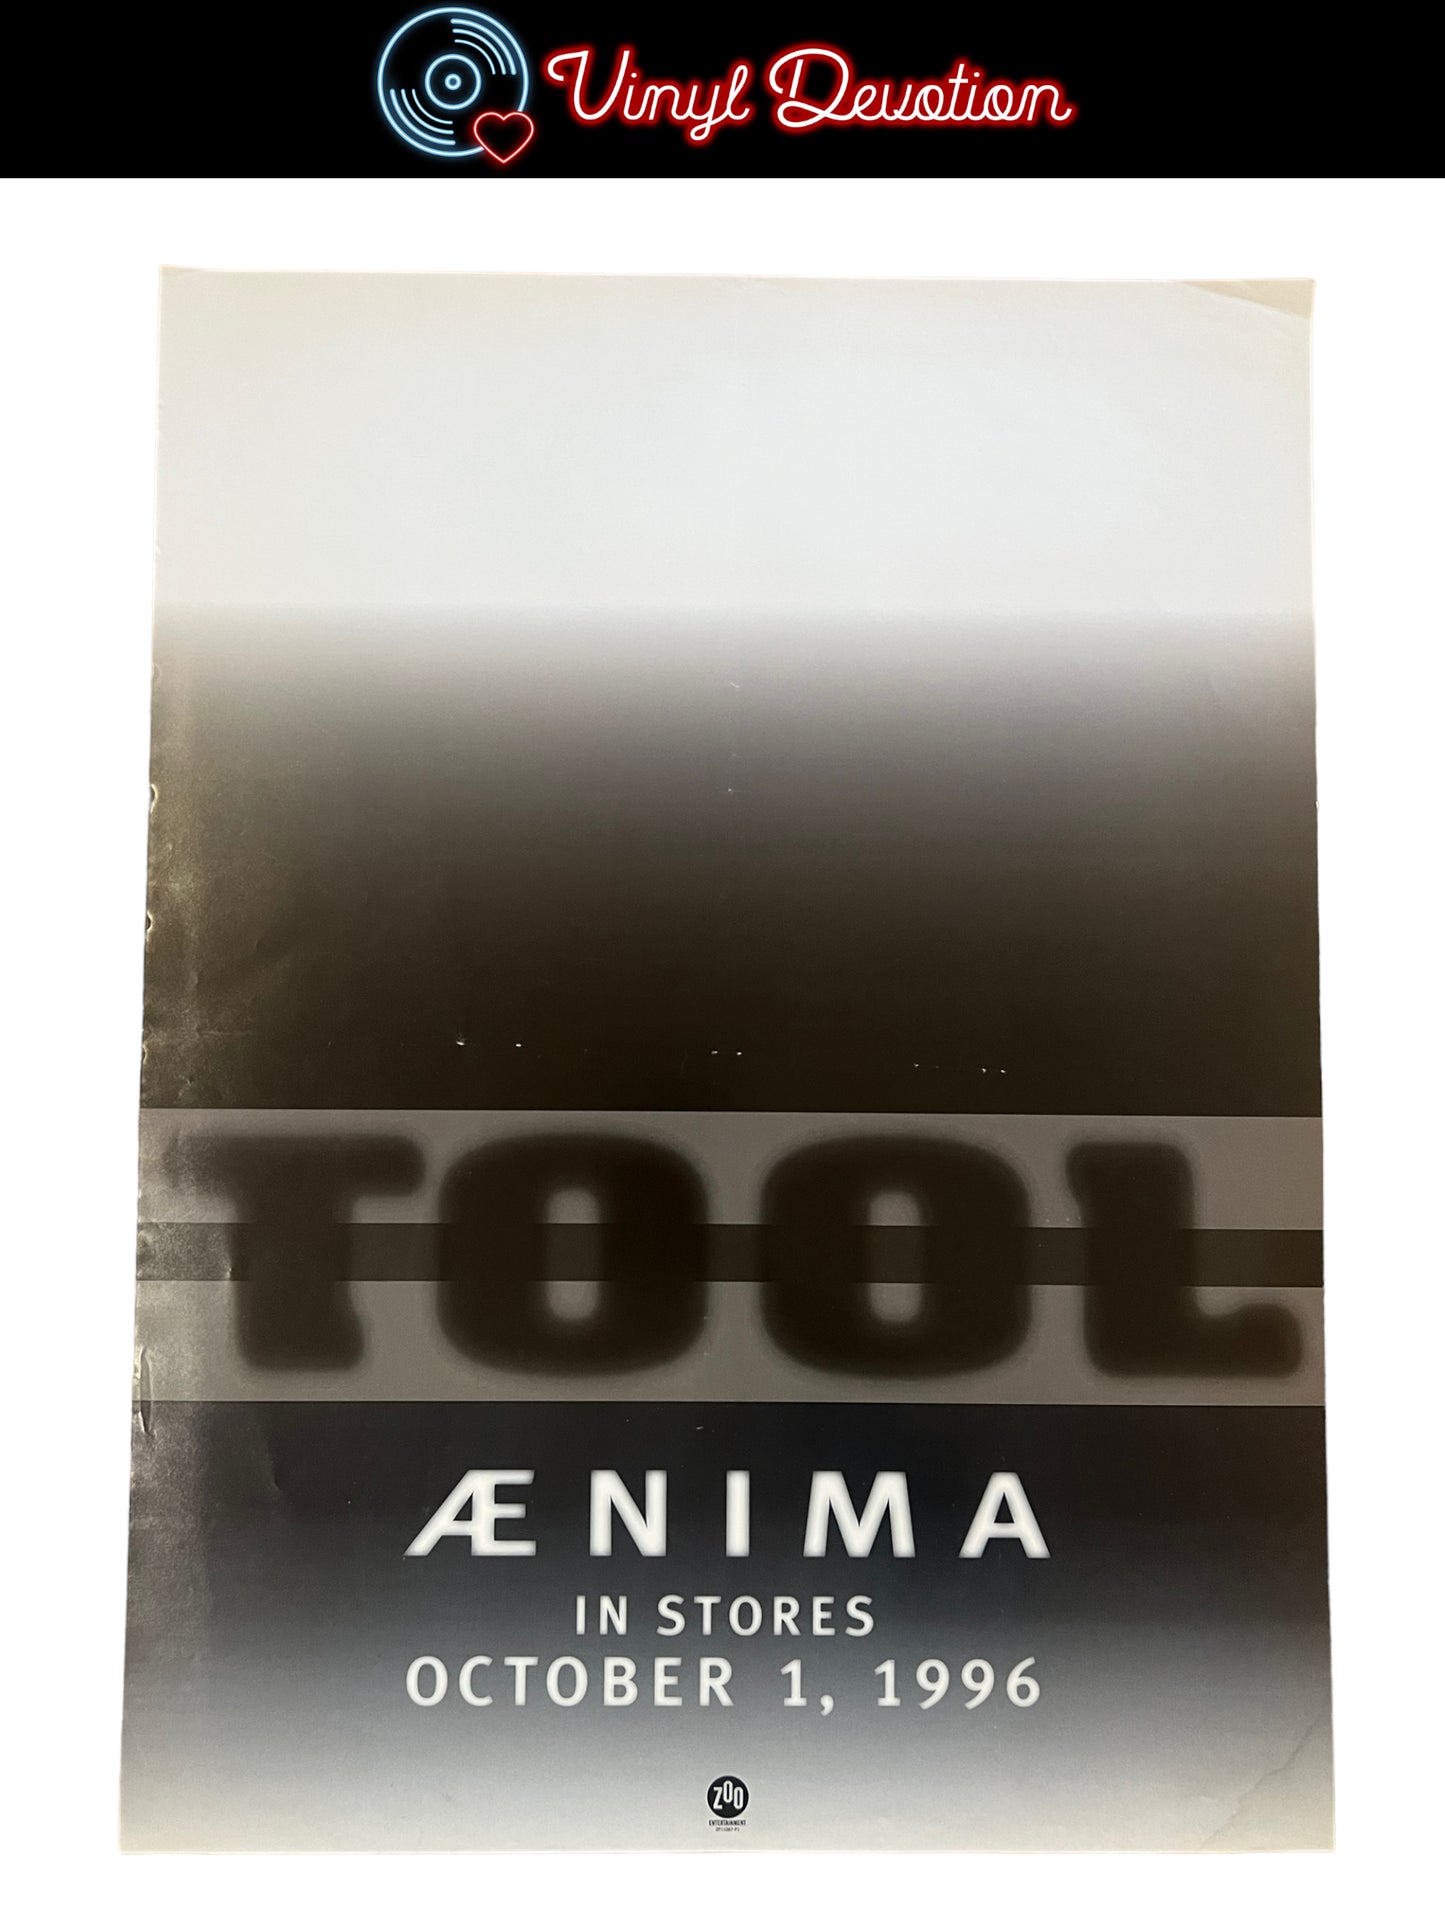 Tool Band - Aenima 1996 Vintage Promo Poster 18 x 24